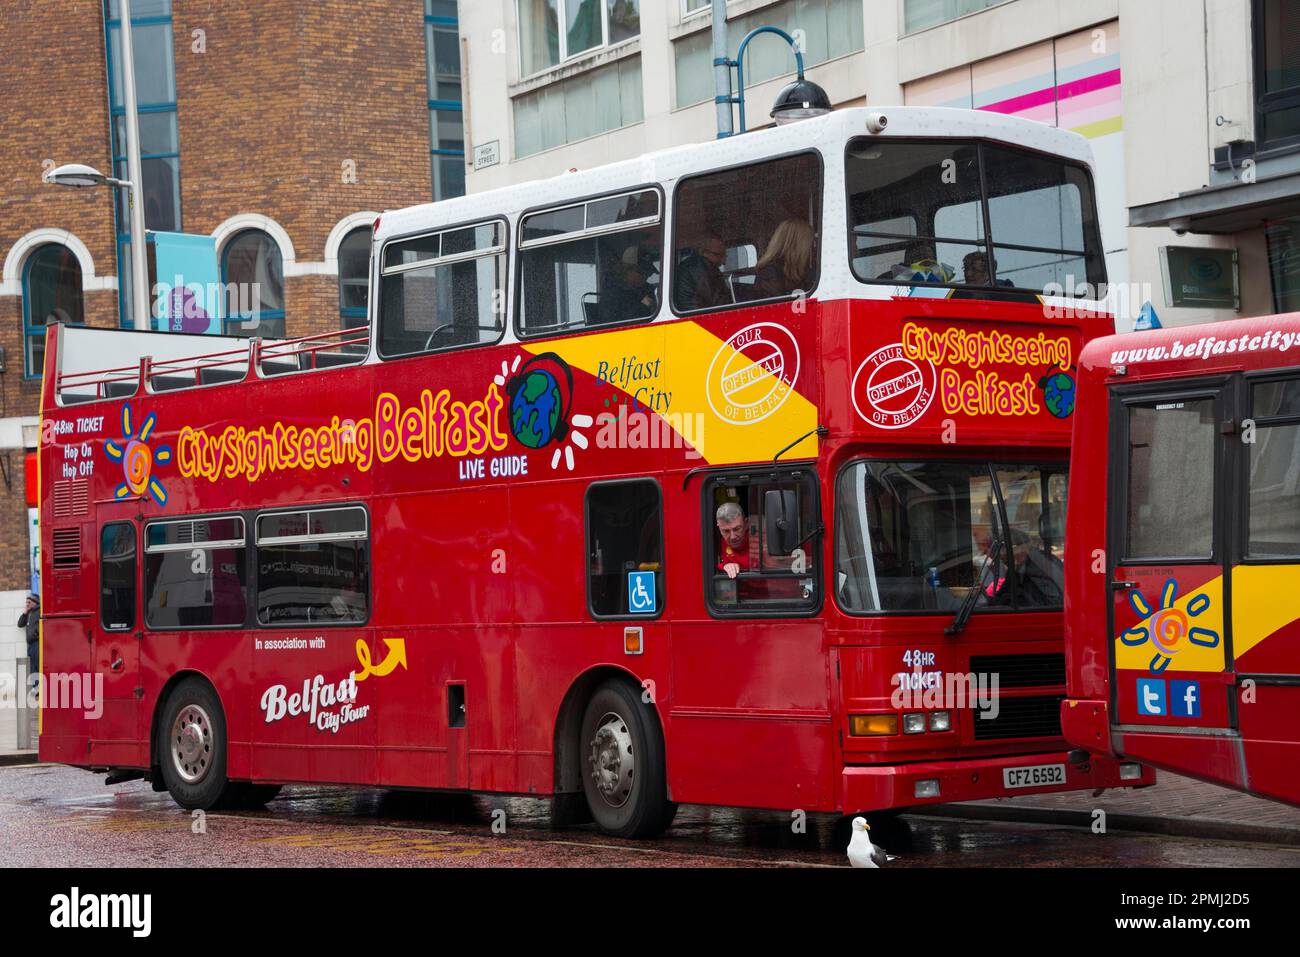 City Sightseeing Bus, Double Decker Bus, Belfast, Northern Ireland, United Kingdom Stock Photo